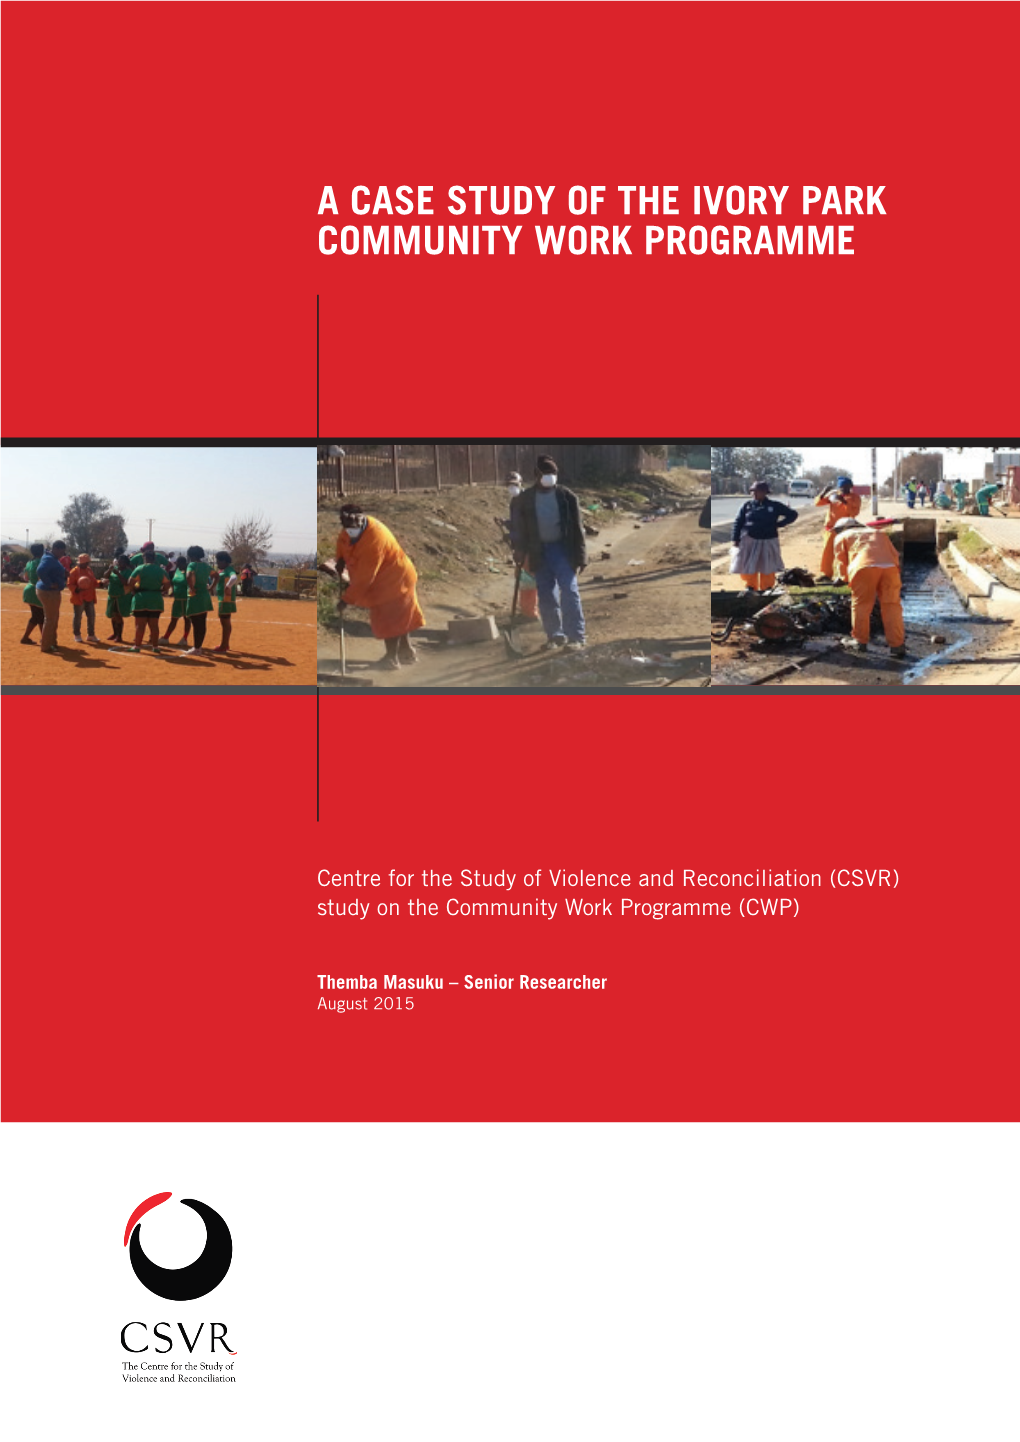 A Case Study of the Ivory Park Community Work Programme